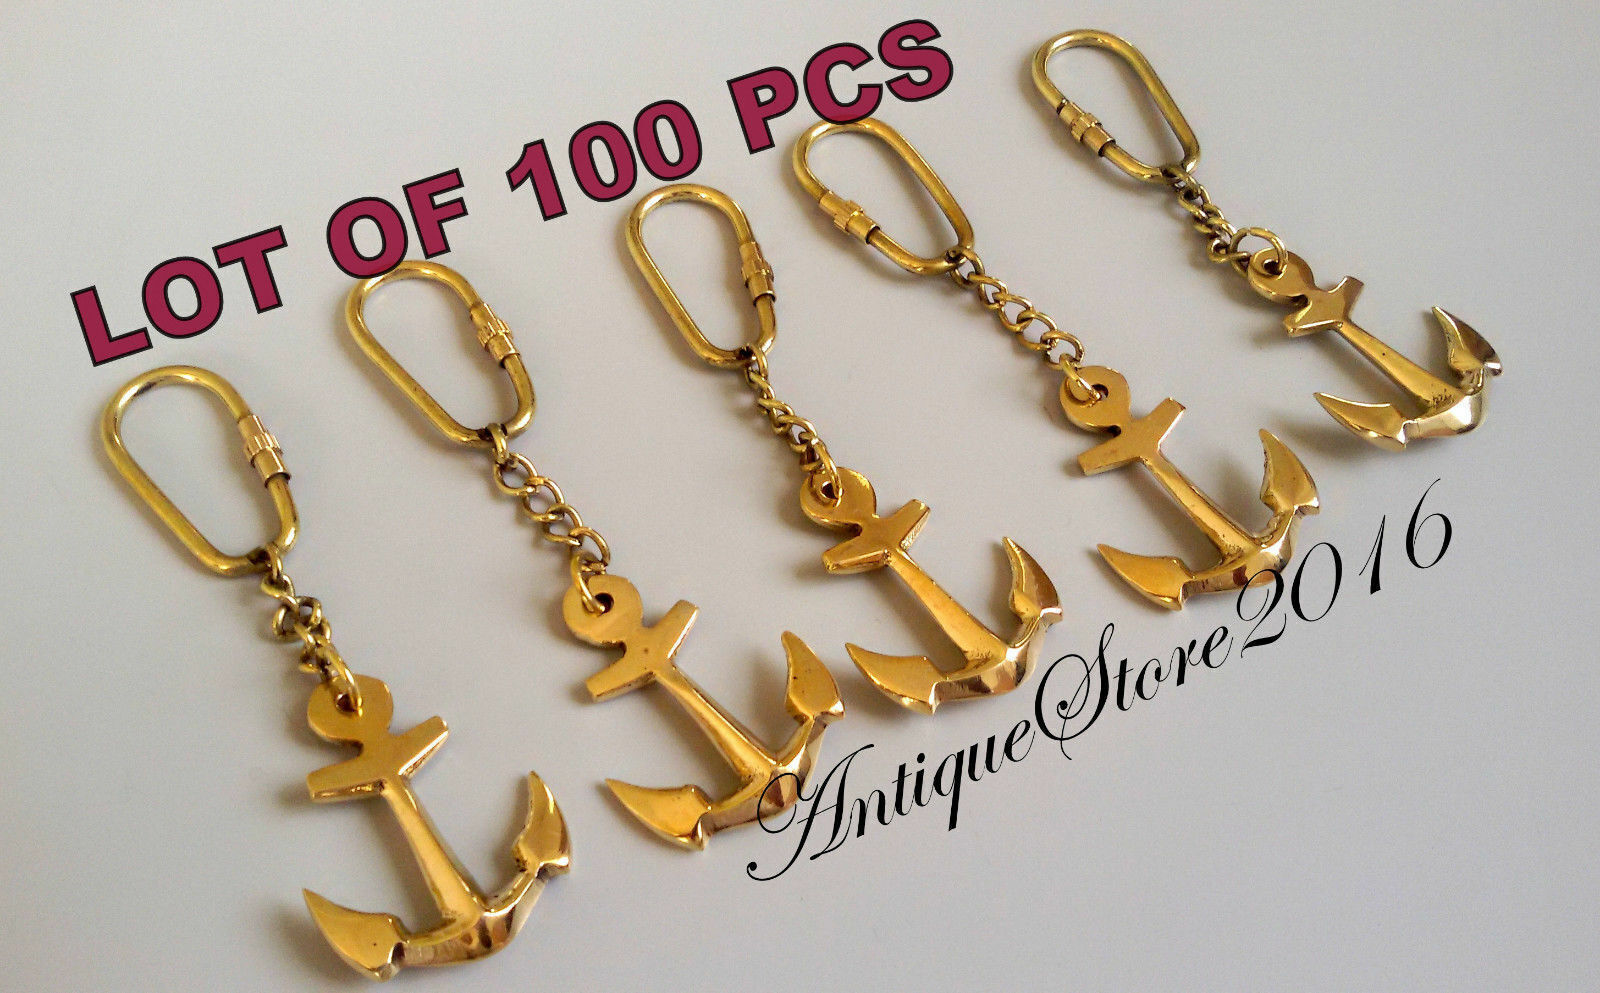 LOT OF 100 PCS ANCHOR Maritime Key Chain Marine Brass Nautical Vintage WHOLESALE